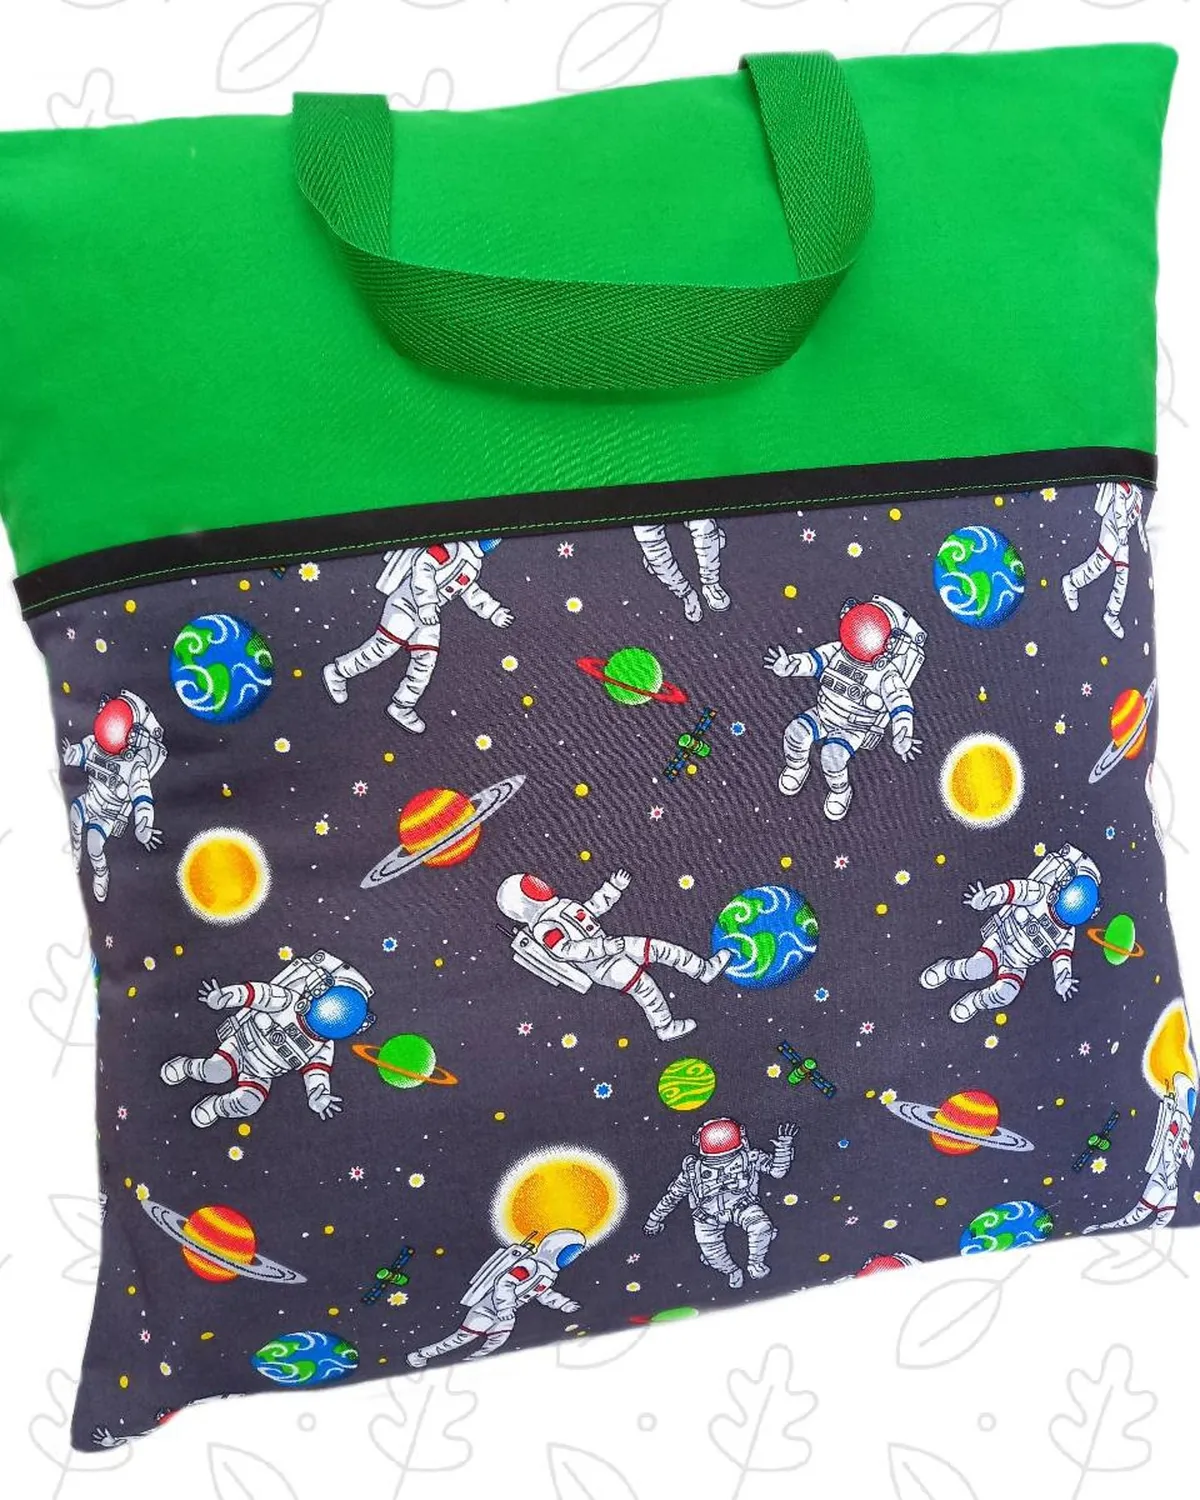 Astronaut cushion sewing kit